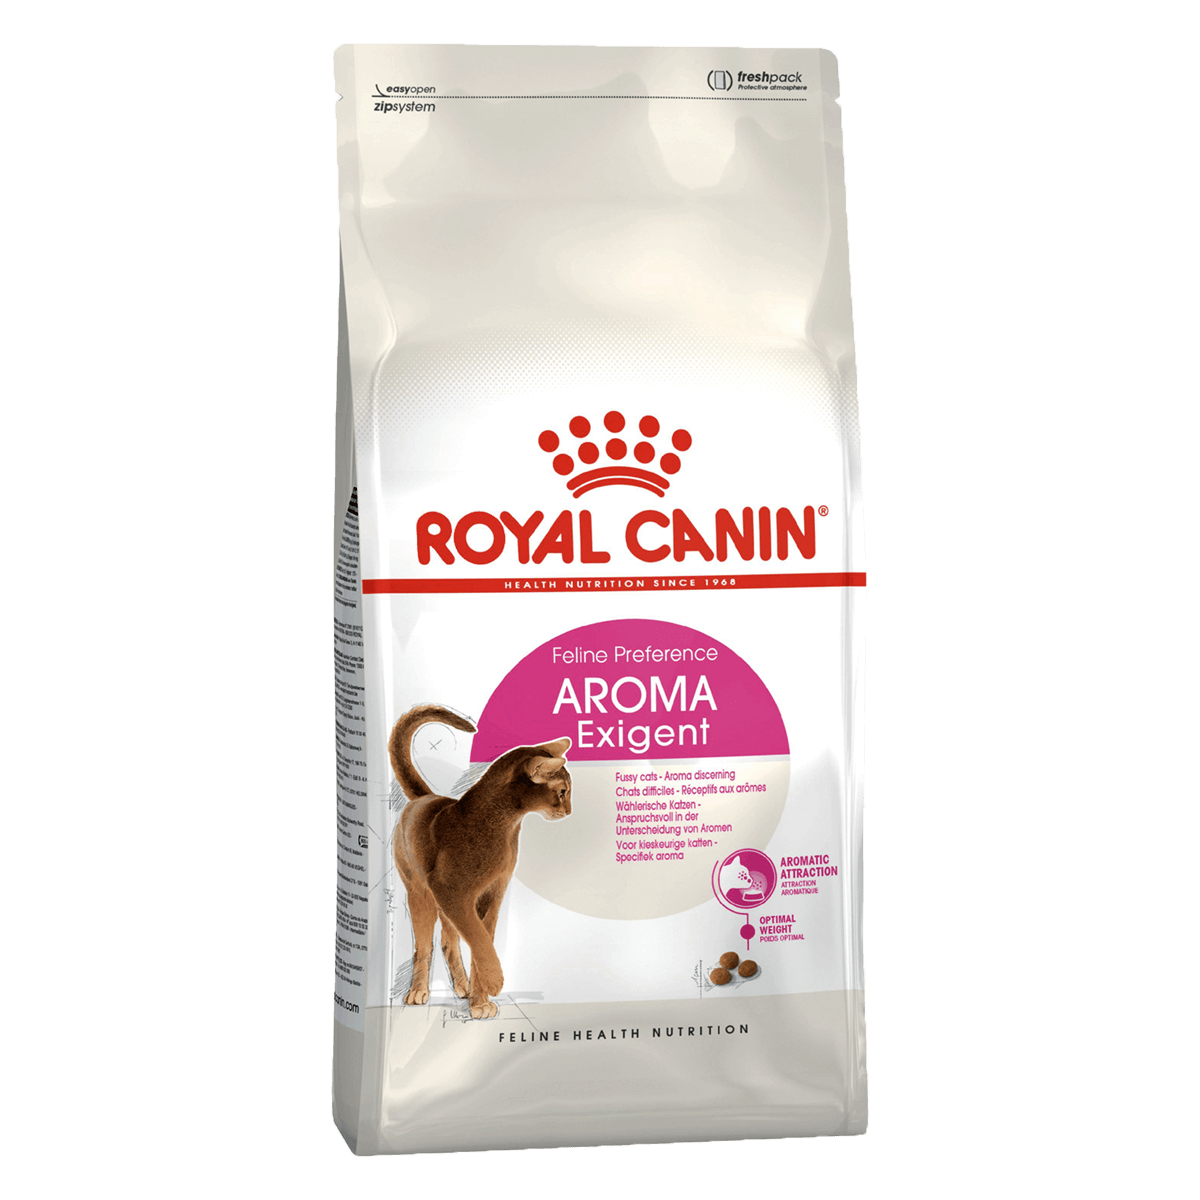 Royal Canin Exigent Aromatic Attraction, 400 г - корм Роял Канин для привередливых кошек